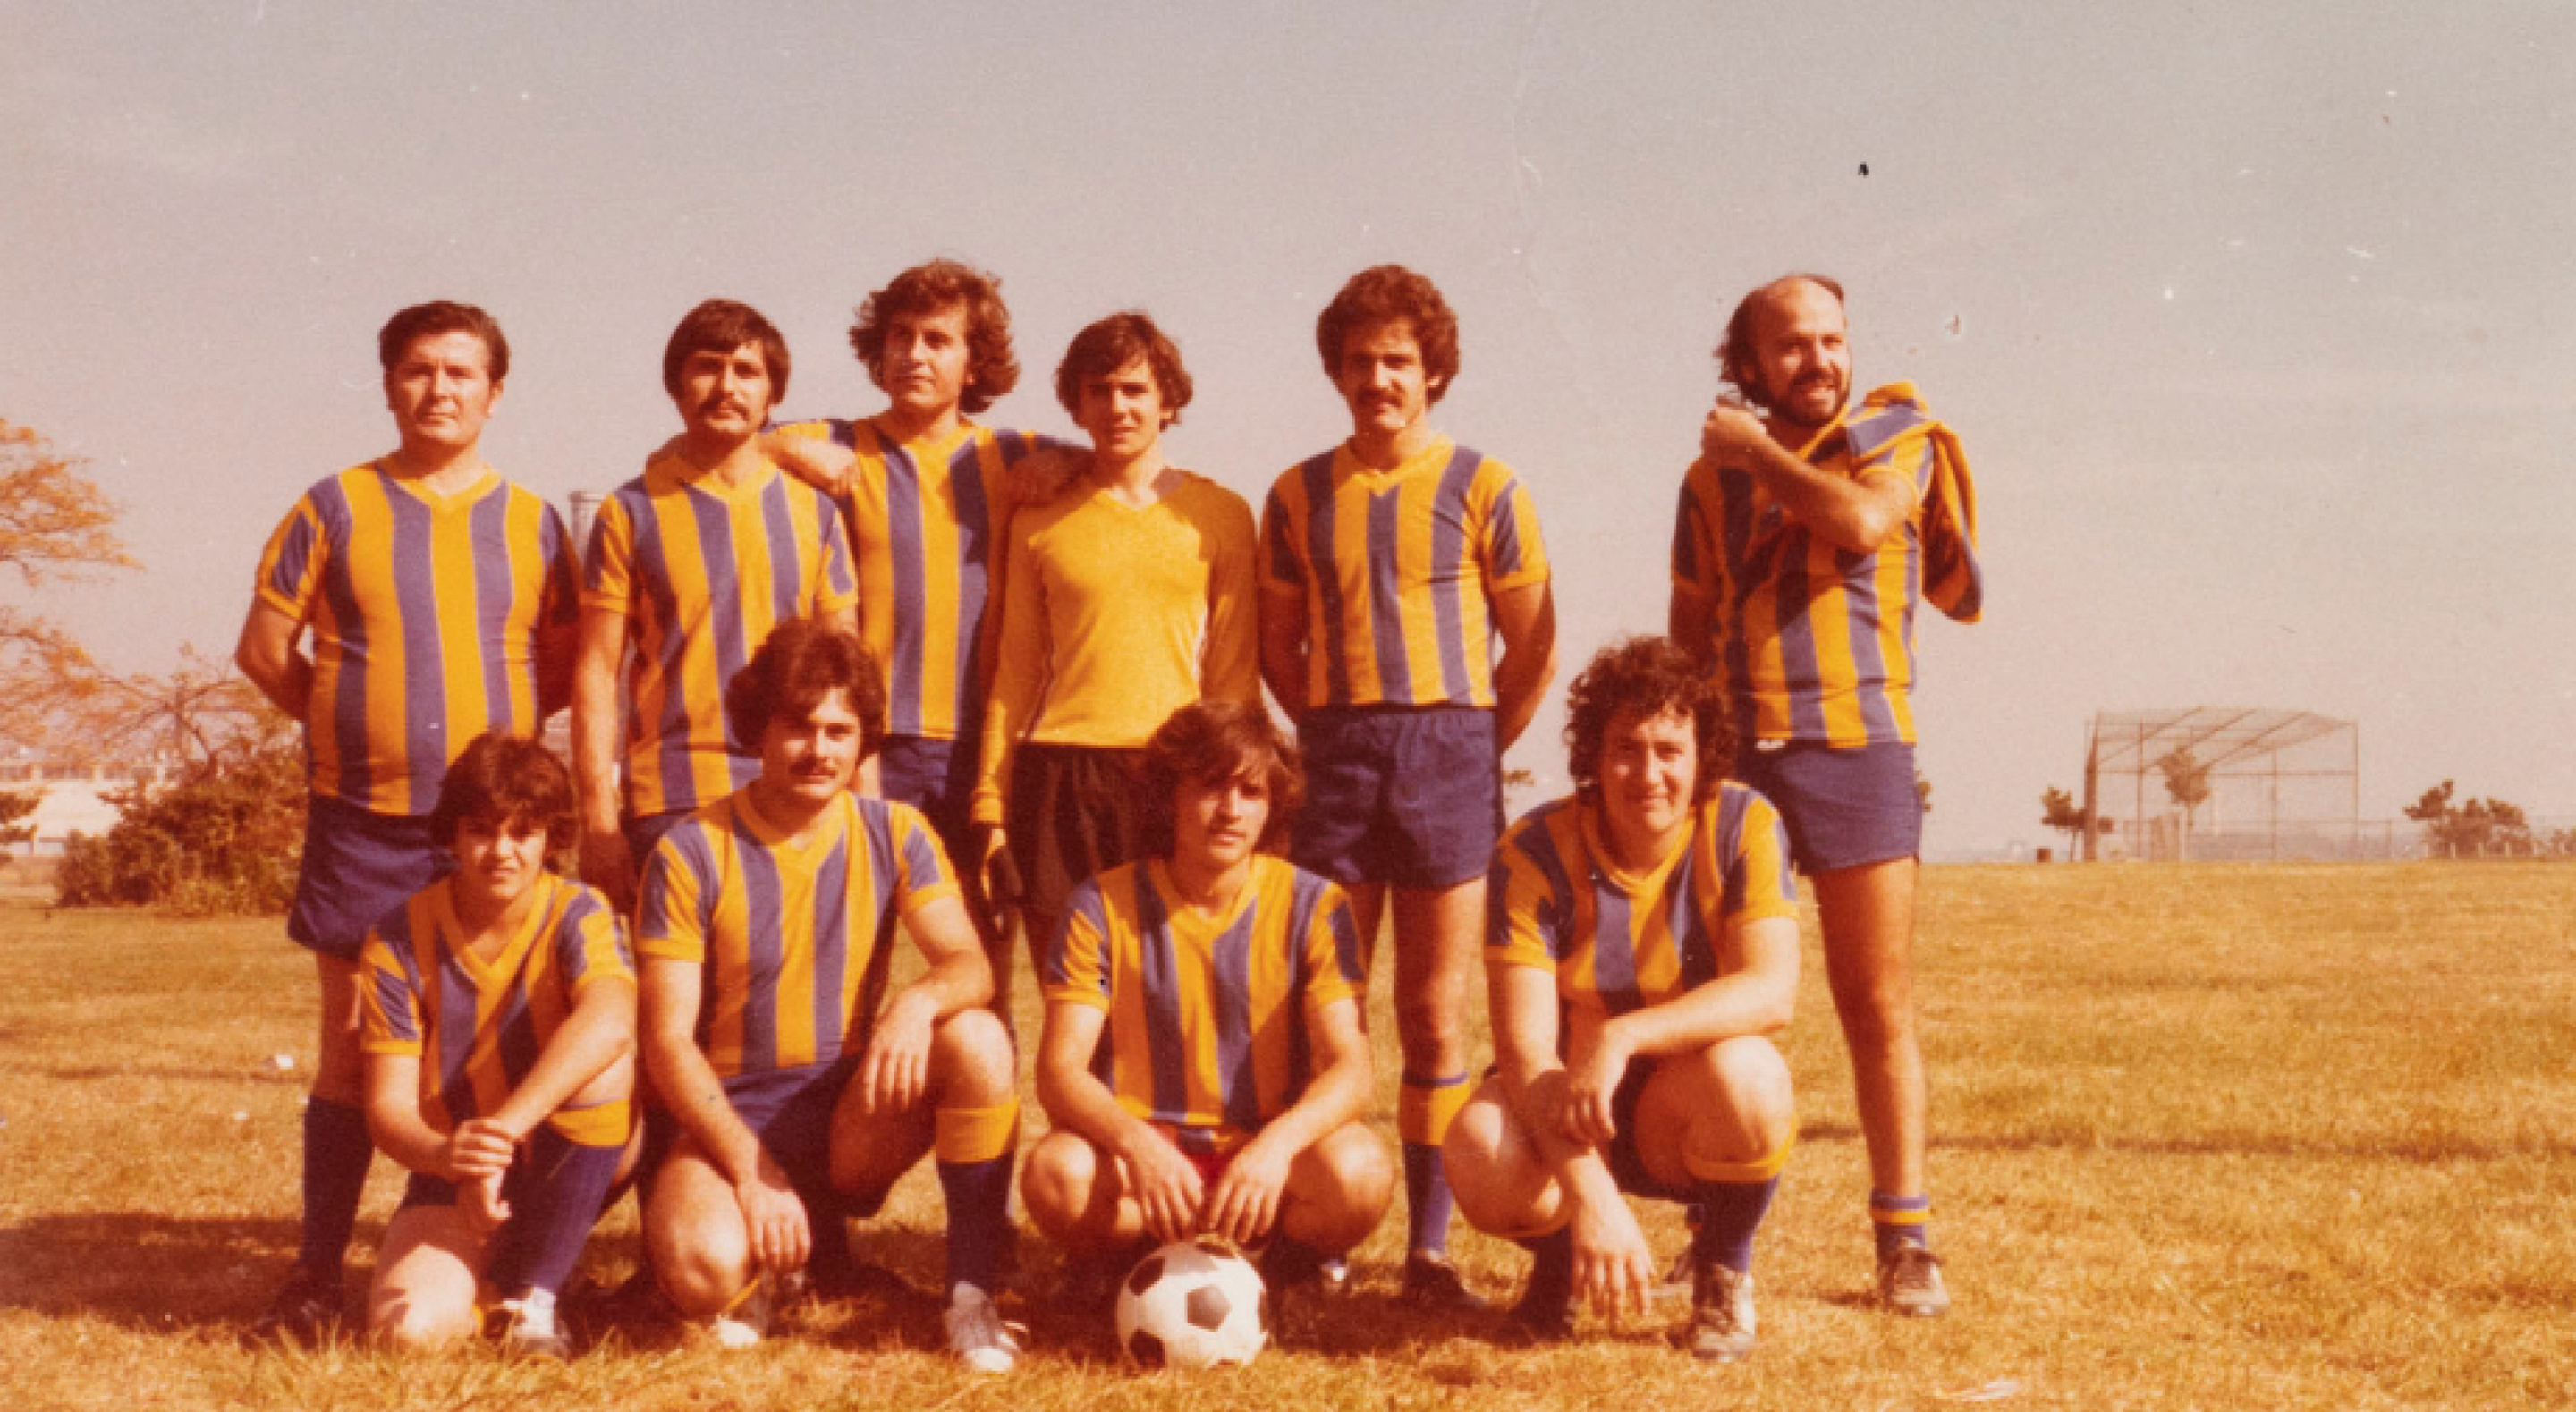 Men's soccer team posing for photo on a field